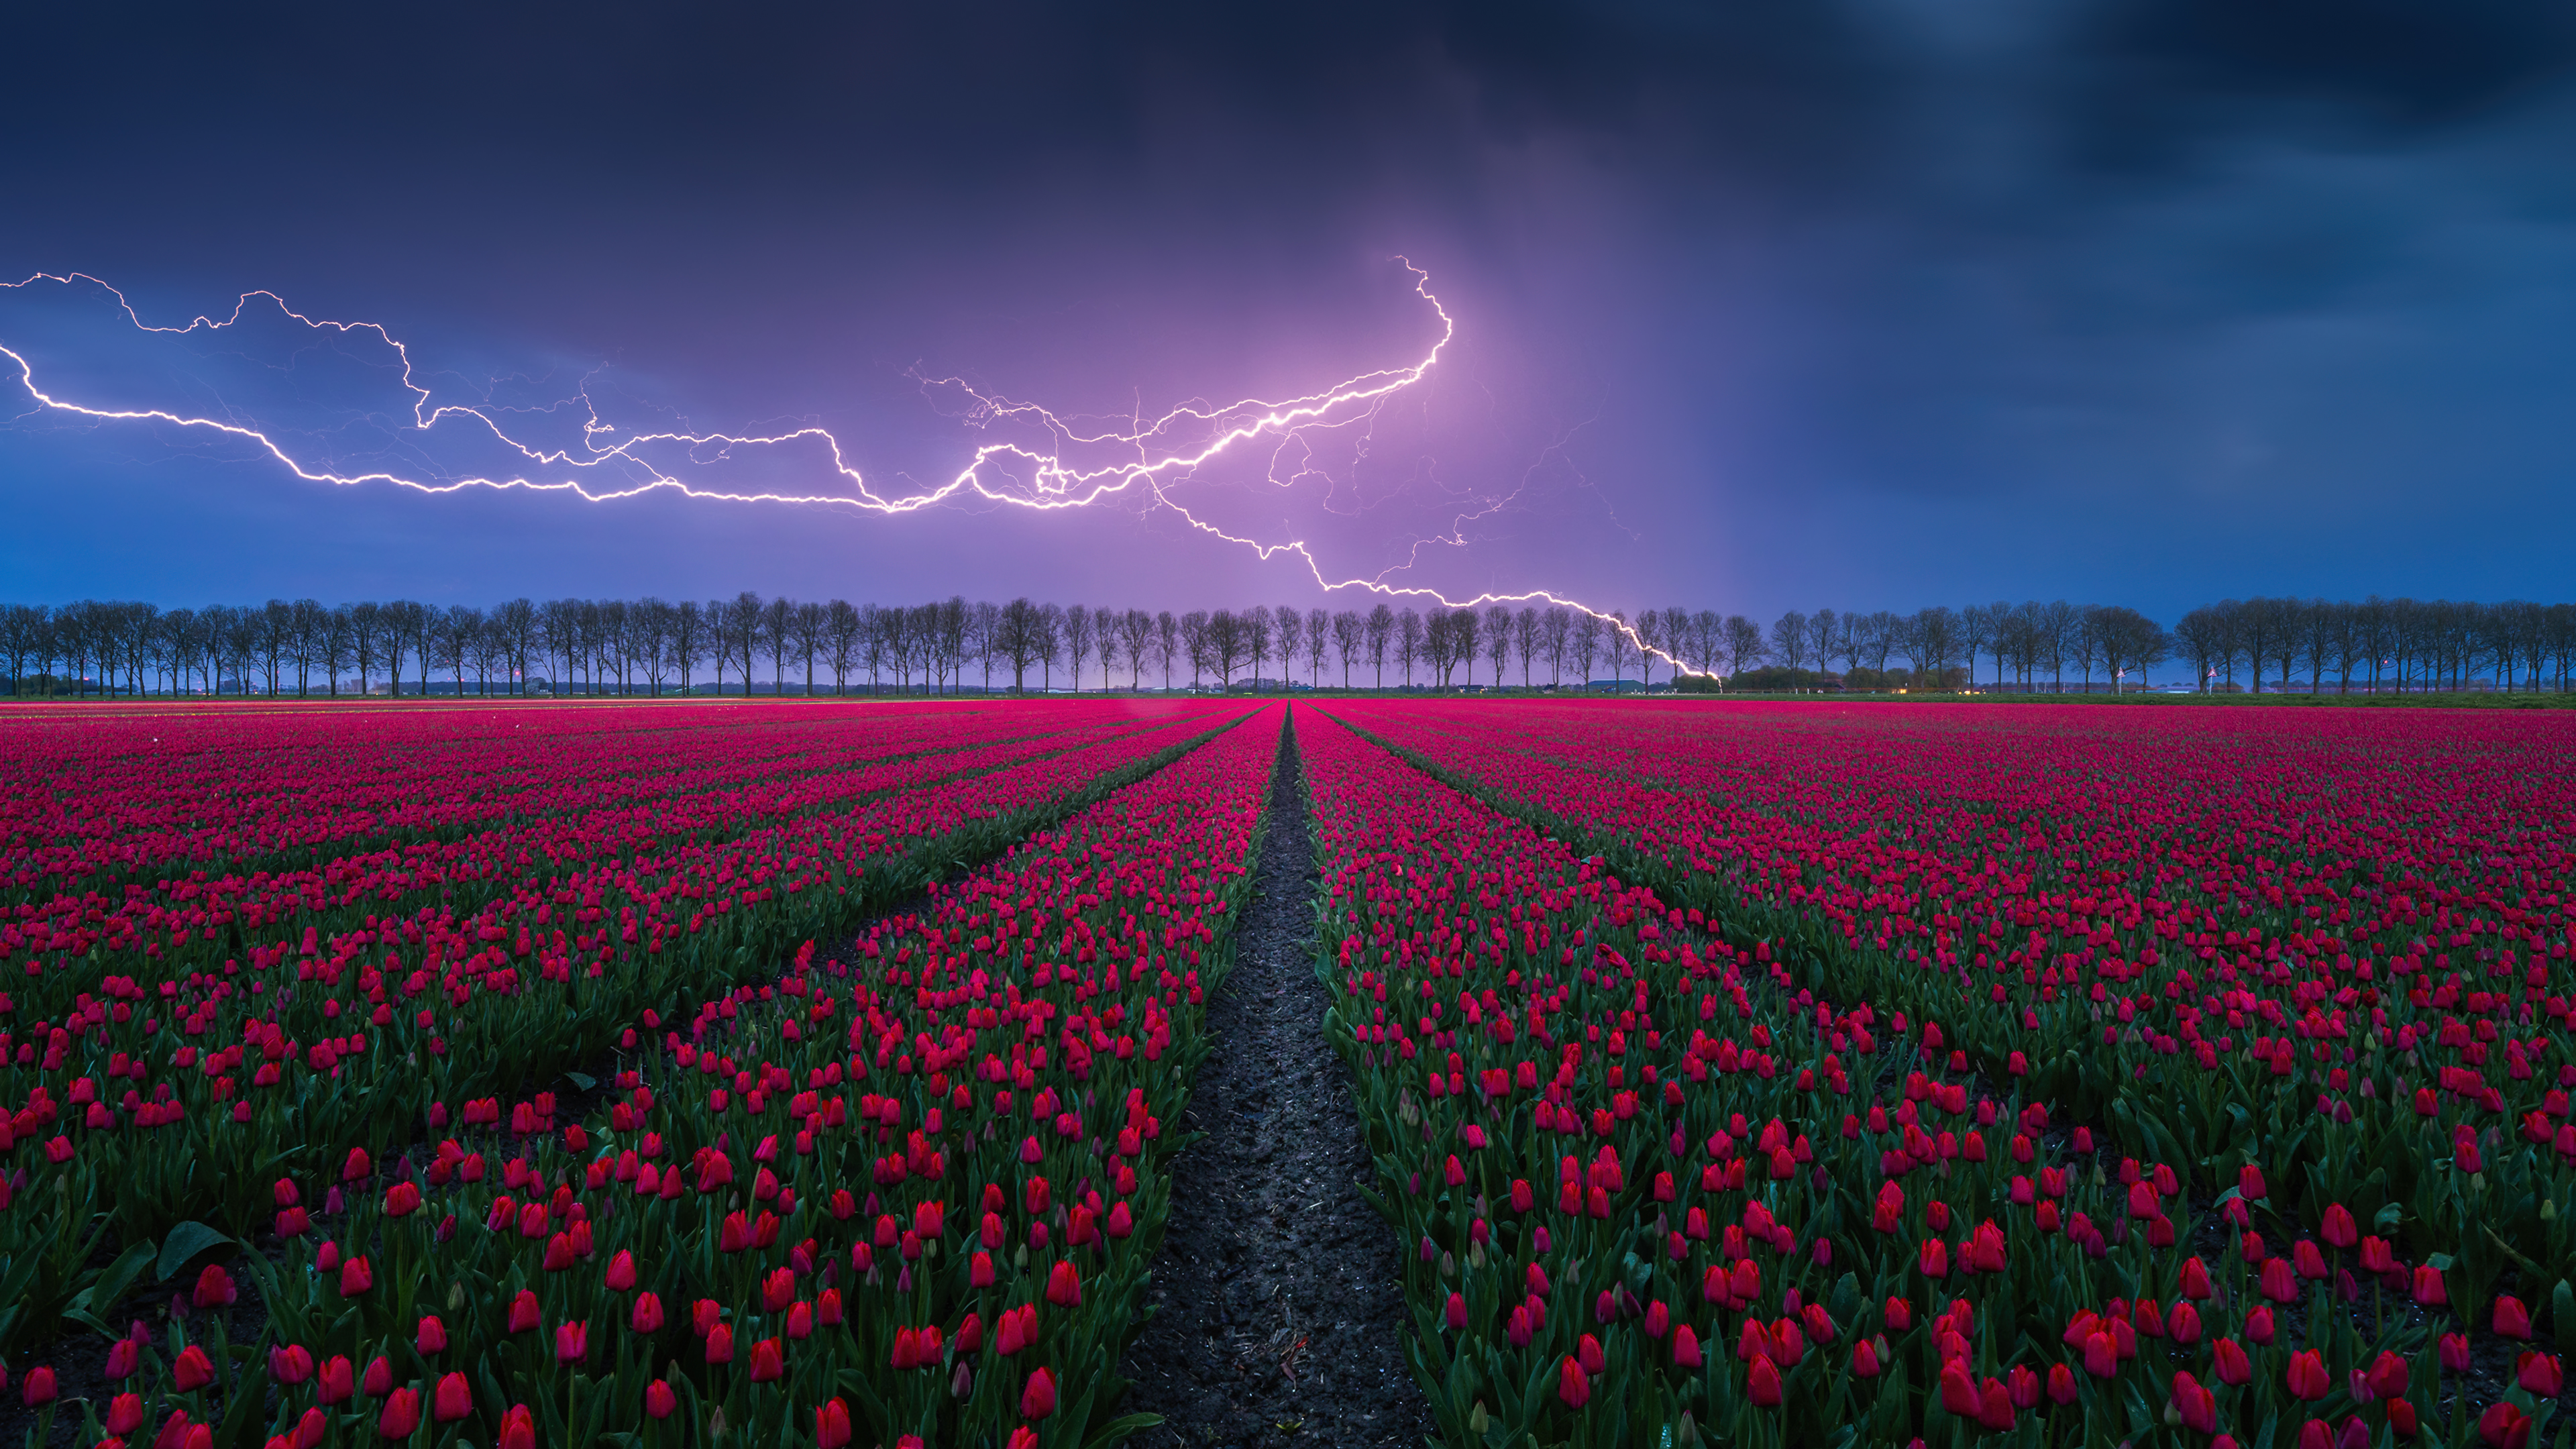 Landscape Photography Nature Field Tulips Lightning Storm Clouds Sky Tulips Farm 4K 3840x2160